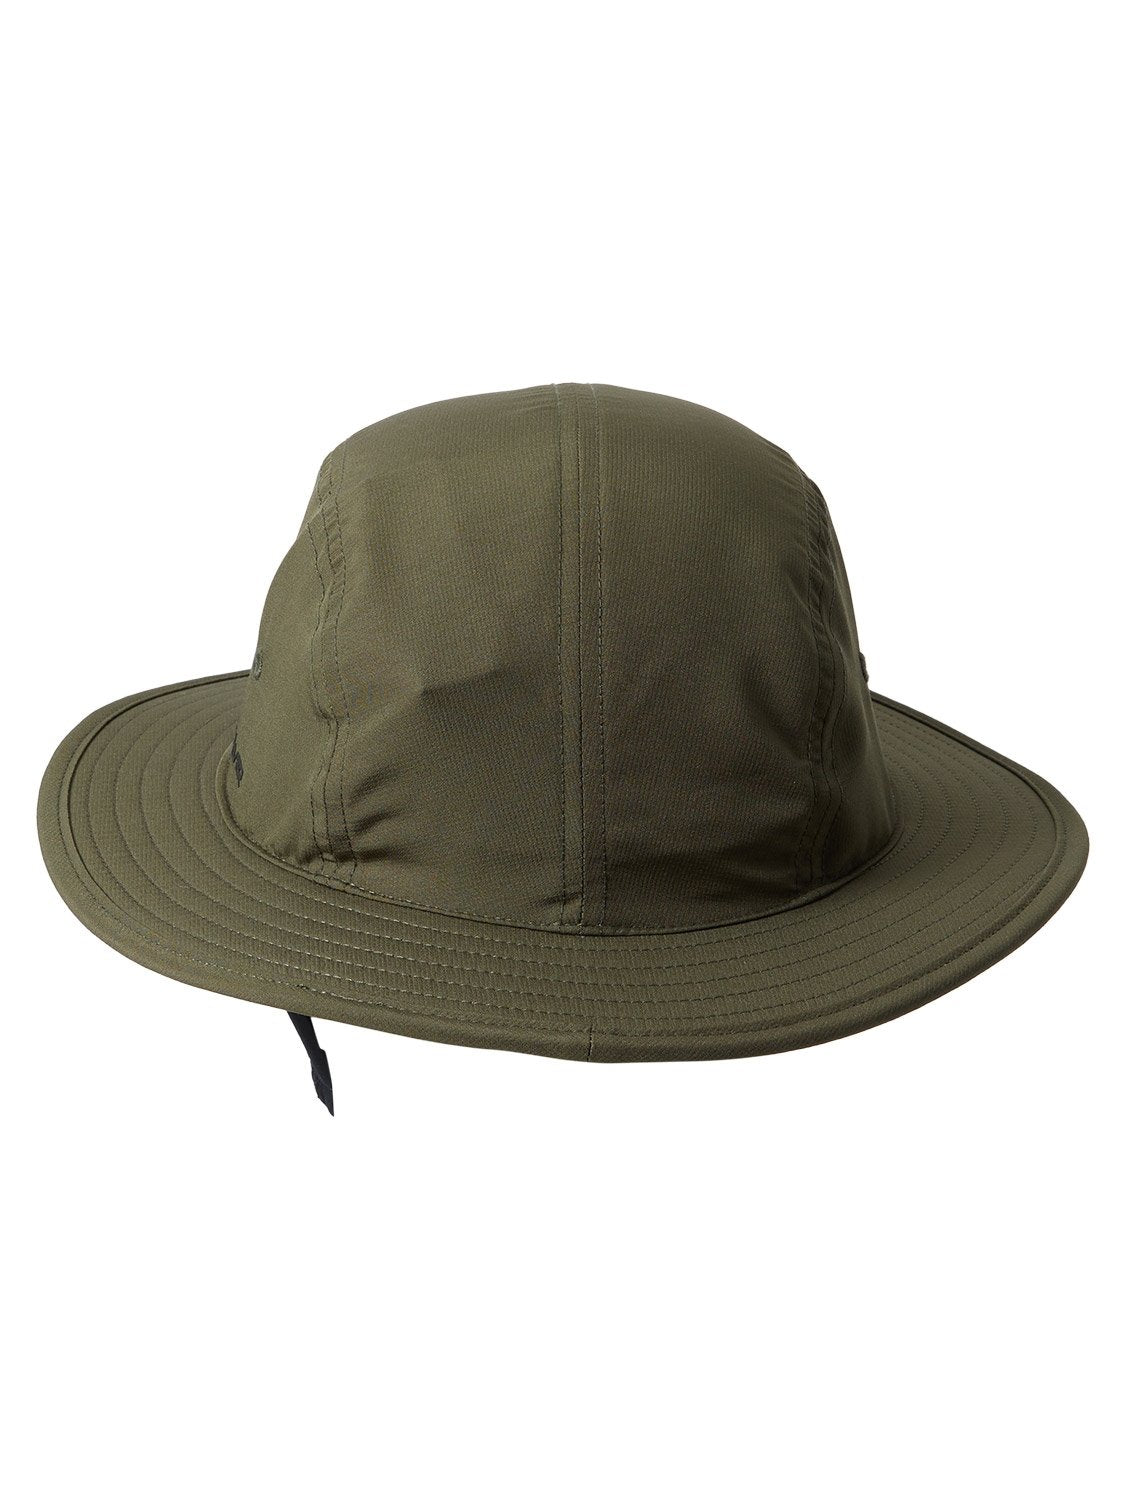 Quiksilver Men's Surfari Boonie Hat